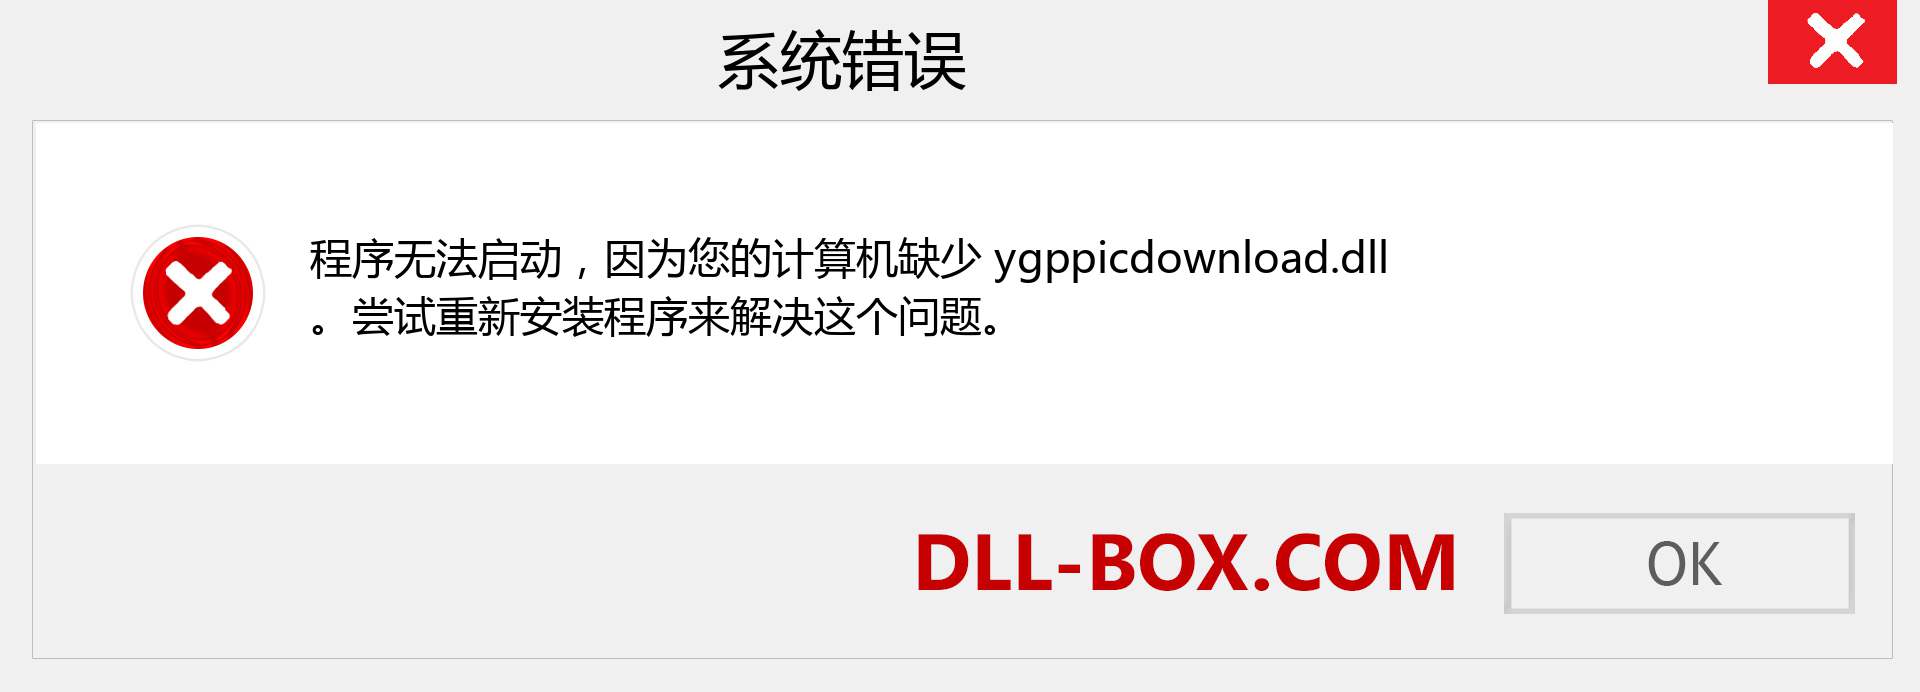 ygppicdownload.dll 文件丢失？。 适用于 Windows 7、8、10 的下载 - 修复 Windows、照片、图像上的 ygppicdownload dll 丢失错误